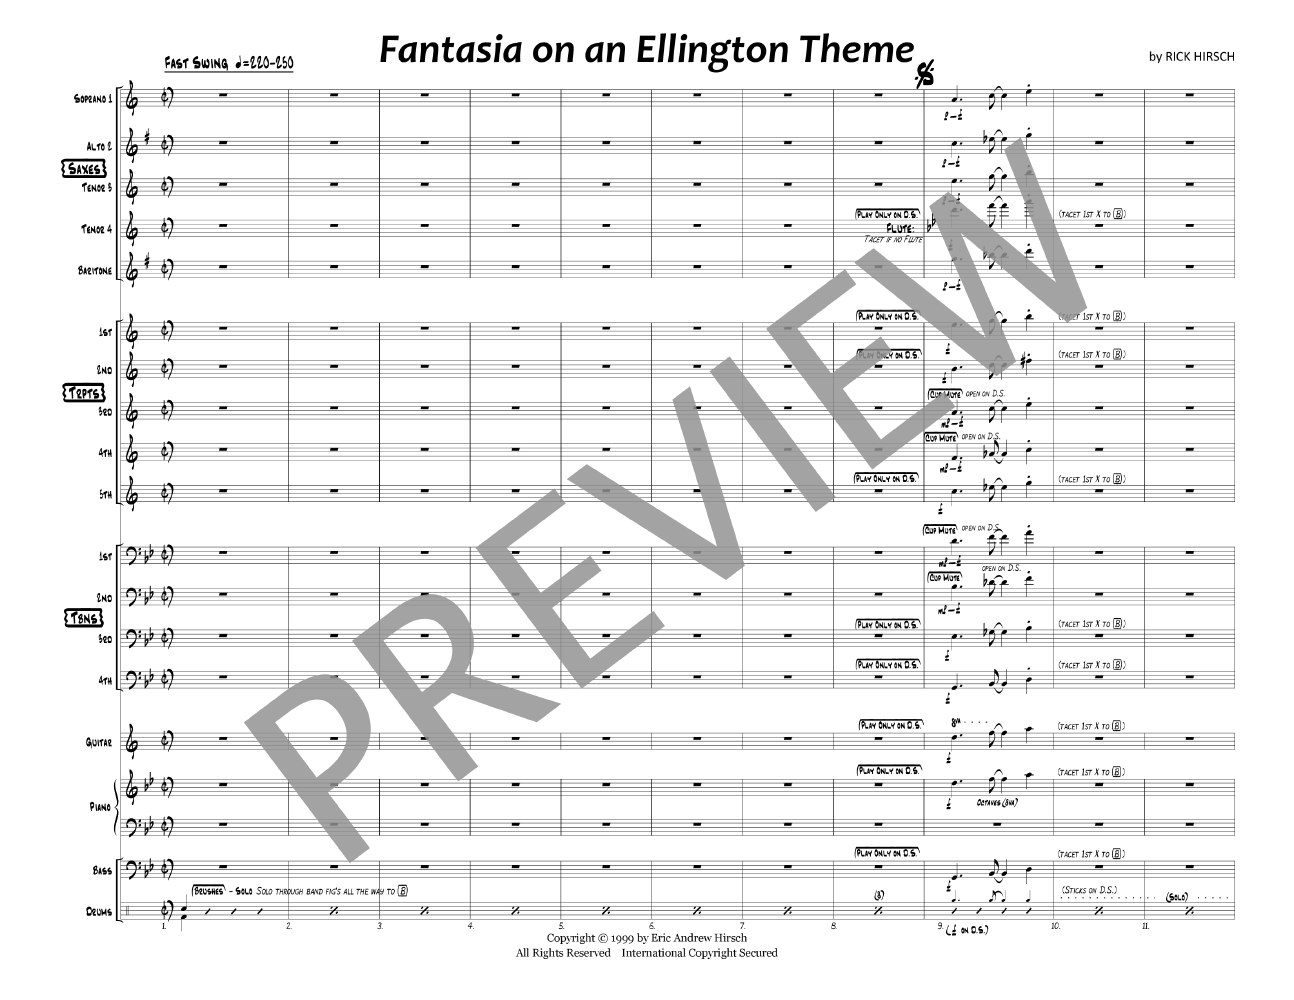 Fantasia on an Ellington Theme P.O.D.